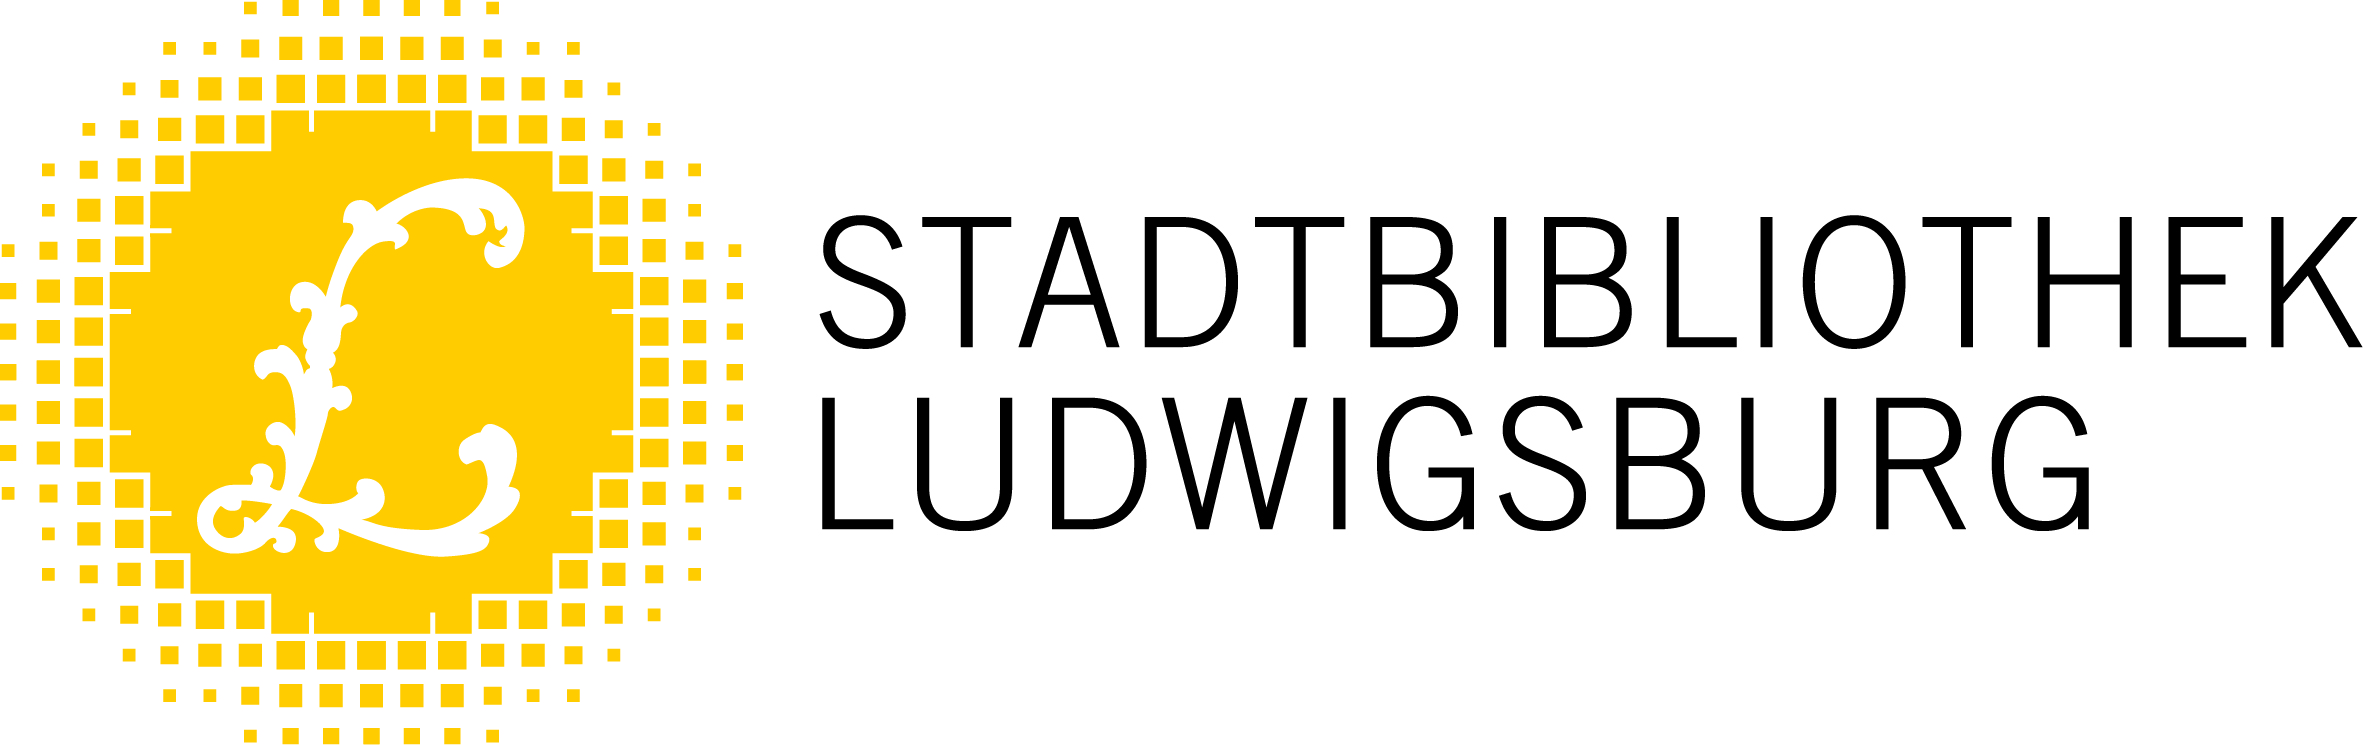 Stadtbibliothek Ludwigsburg